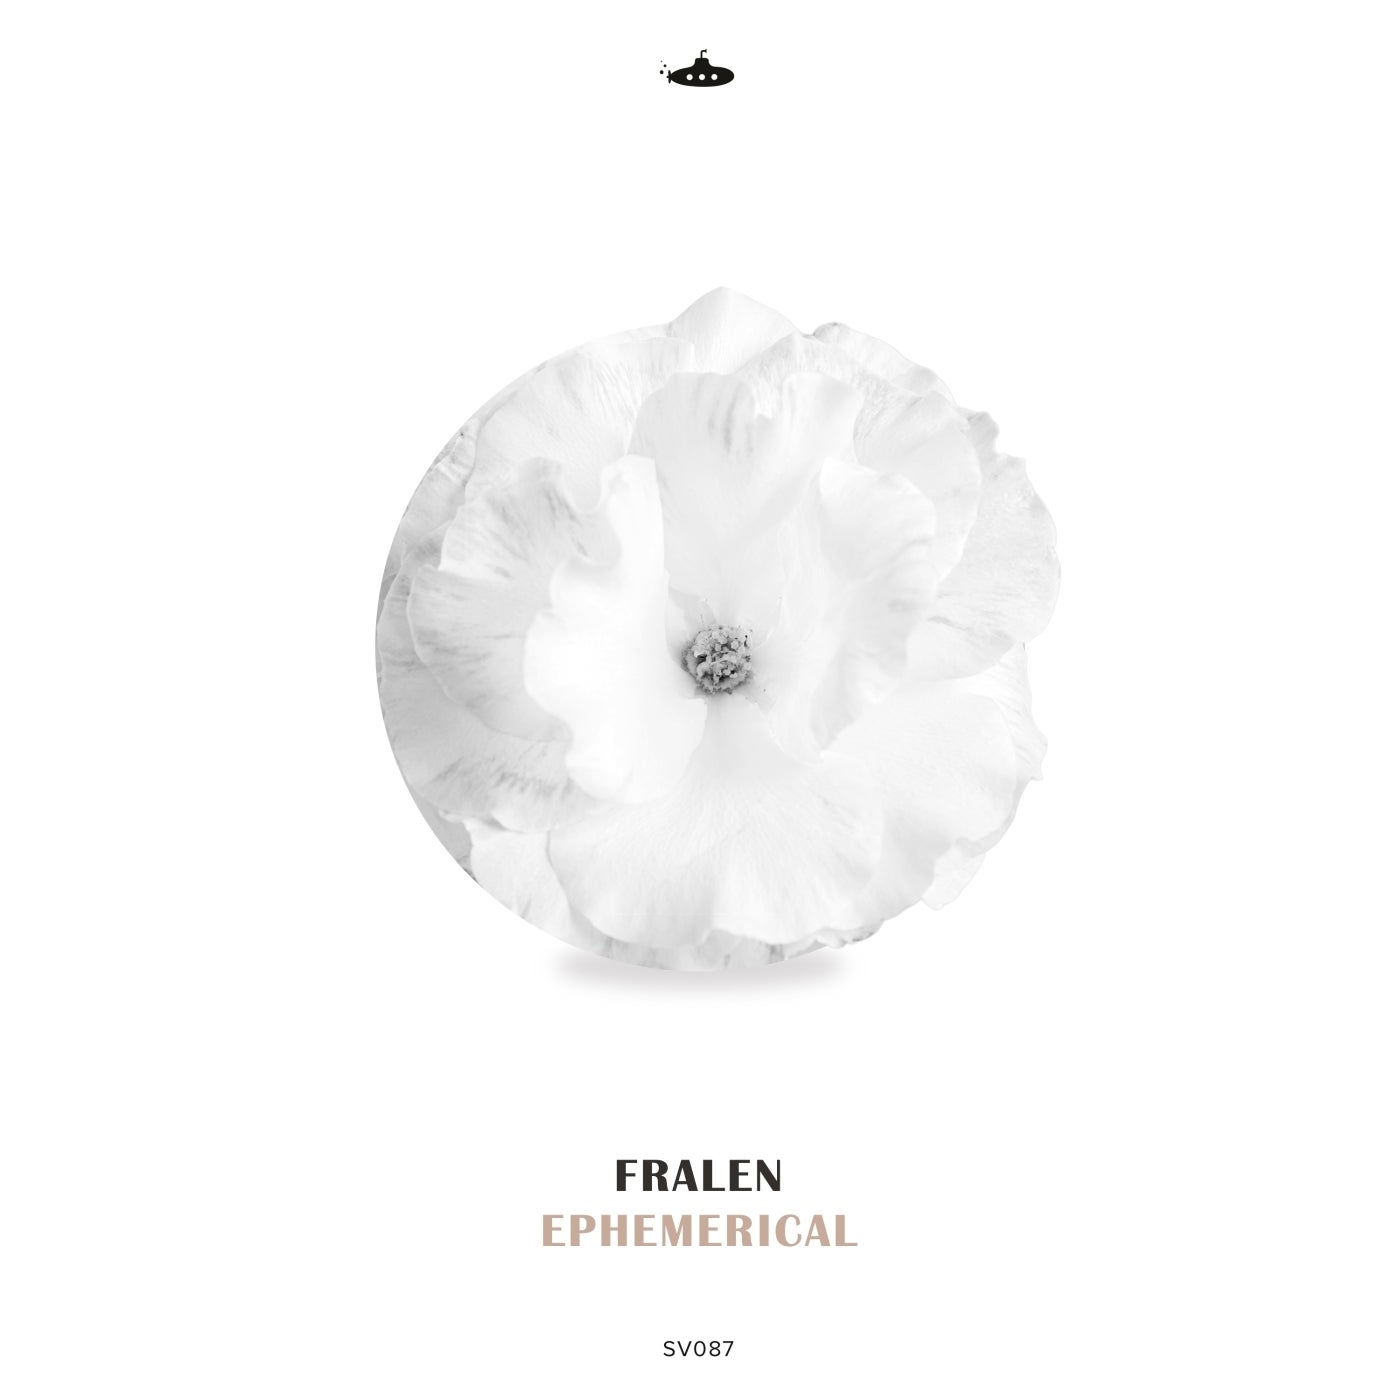 Fralen - Ephemerical [SV087]